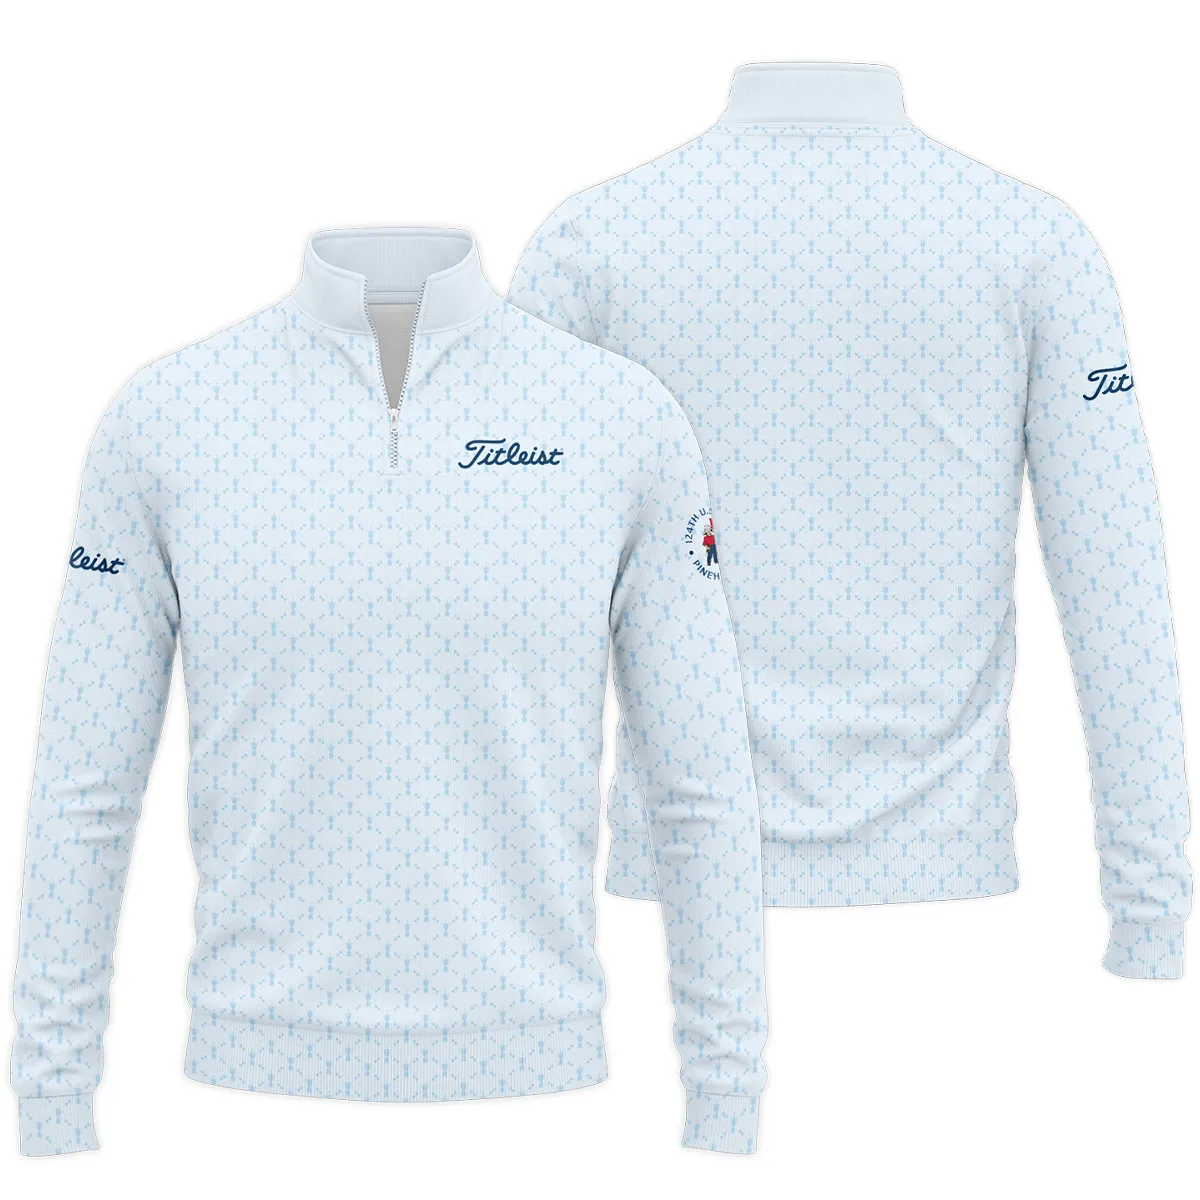 Golf Sport Pattern Blue Sport Uniform 124th U.S. Open Pinehurst Titleist Quarter-Zip Jacket Style Classic